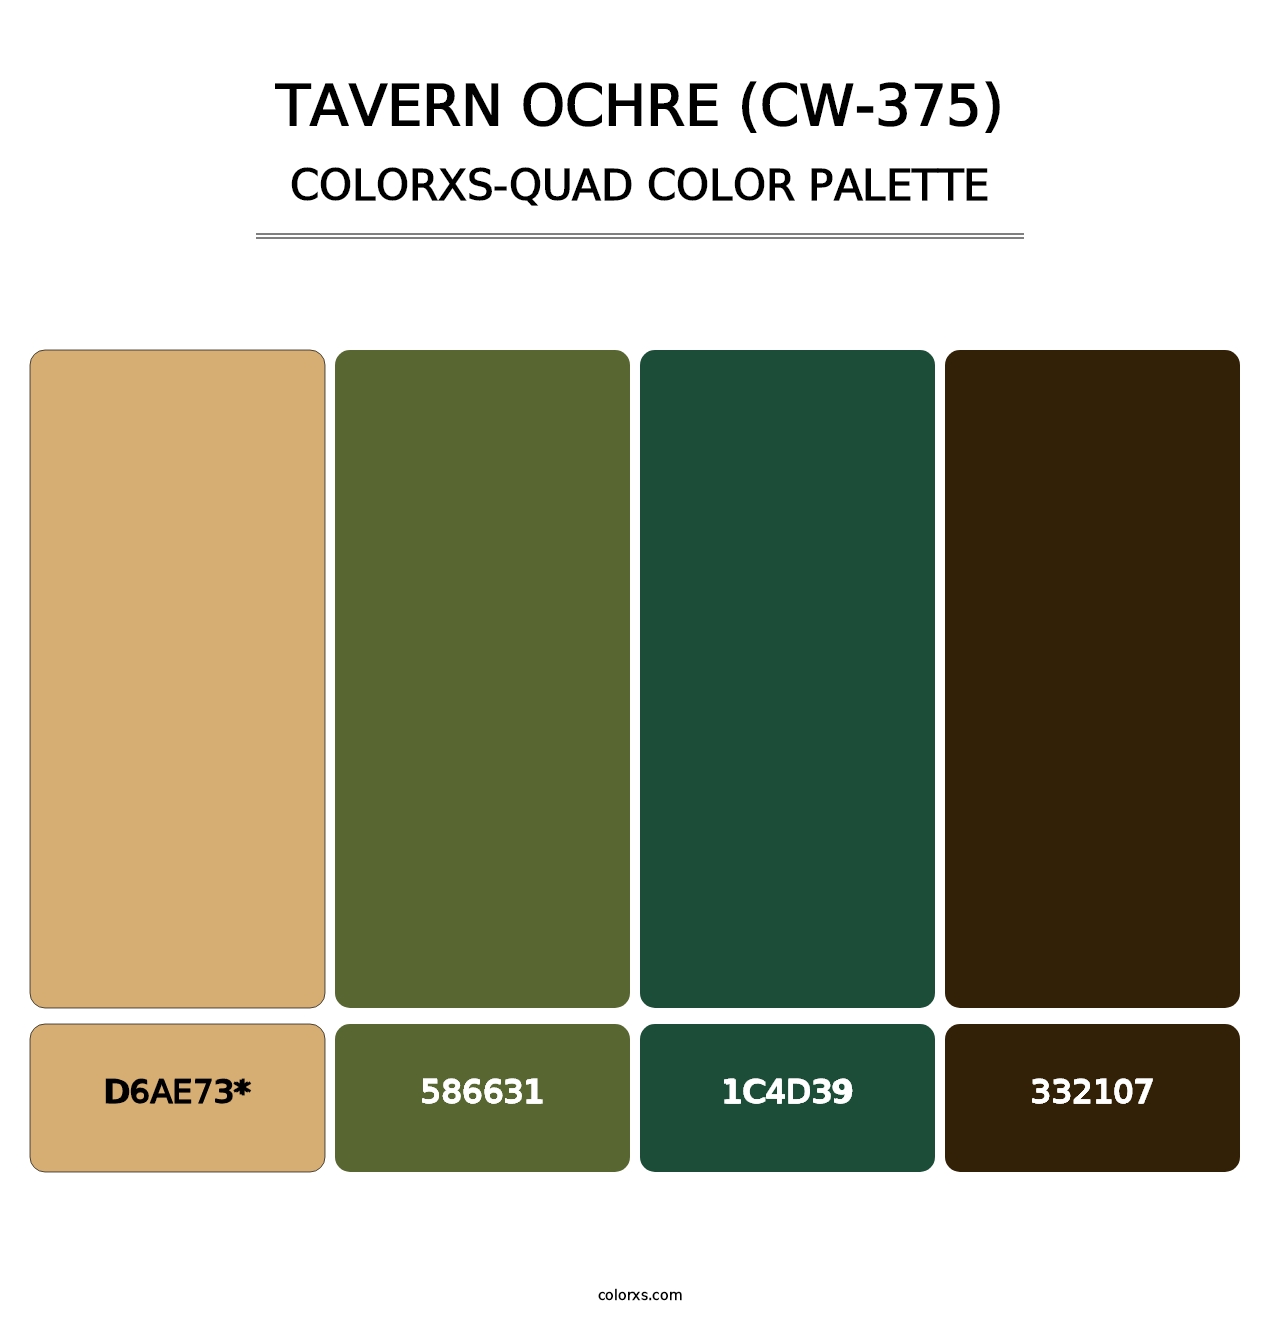 Tavern Ochre (CW-375) - Colorxs Quad Palette